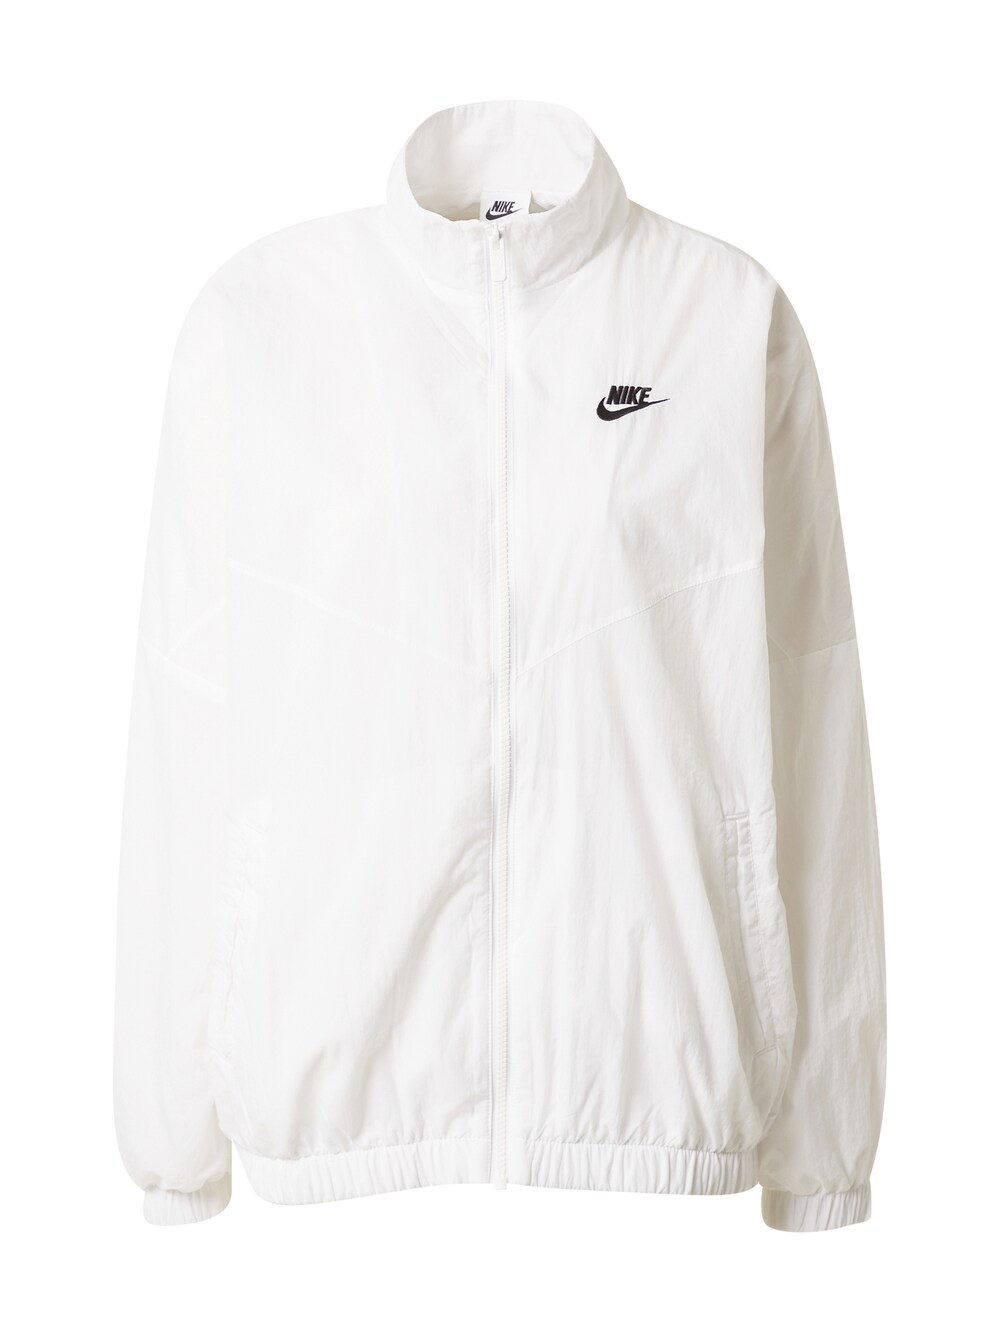 Межсезонная куртка Nike, белый межсезонная куртка nike белый